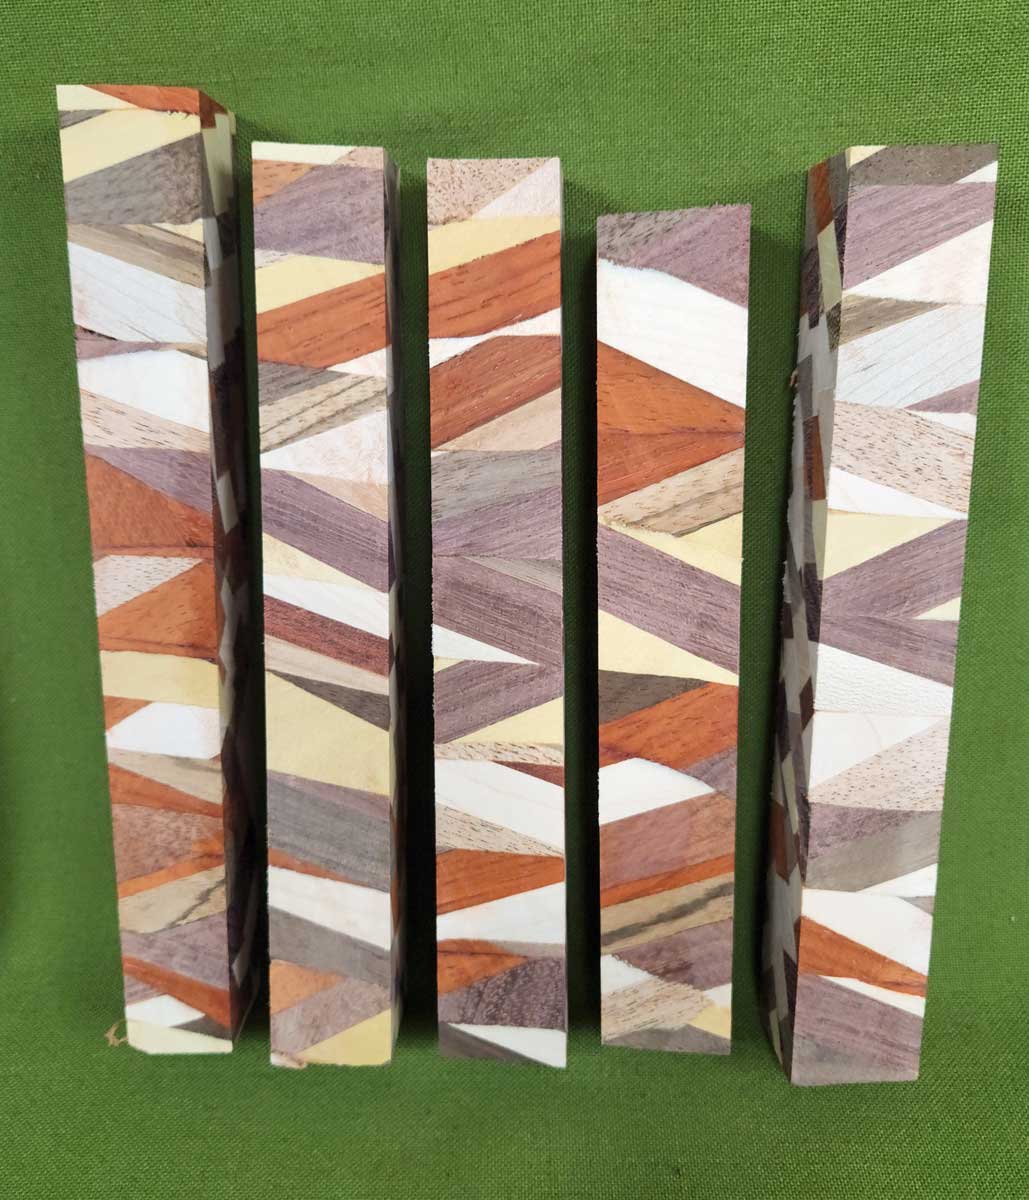 Laminated Wood Pen Blanks